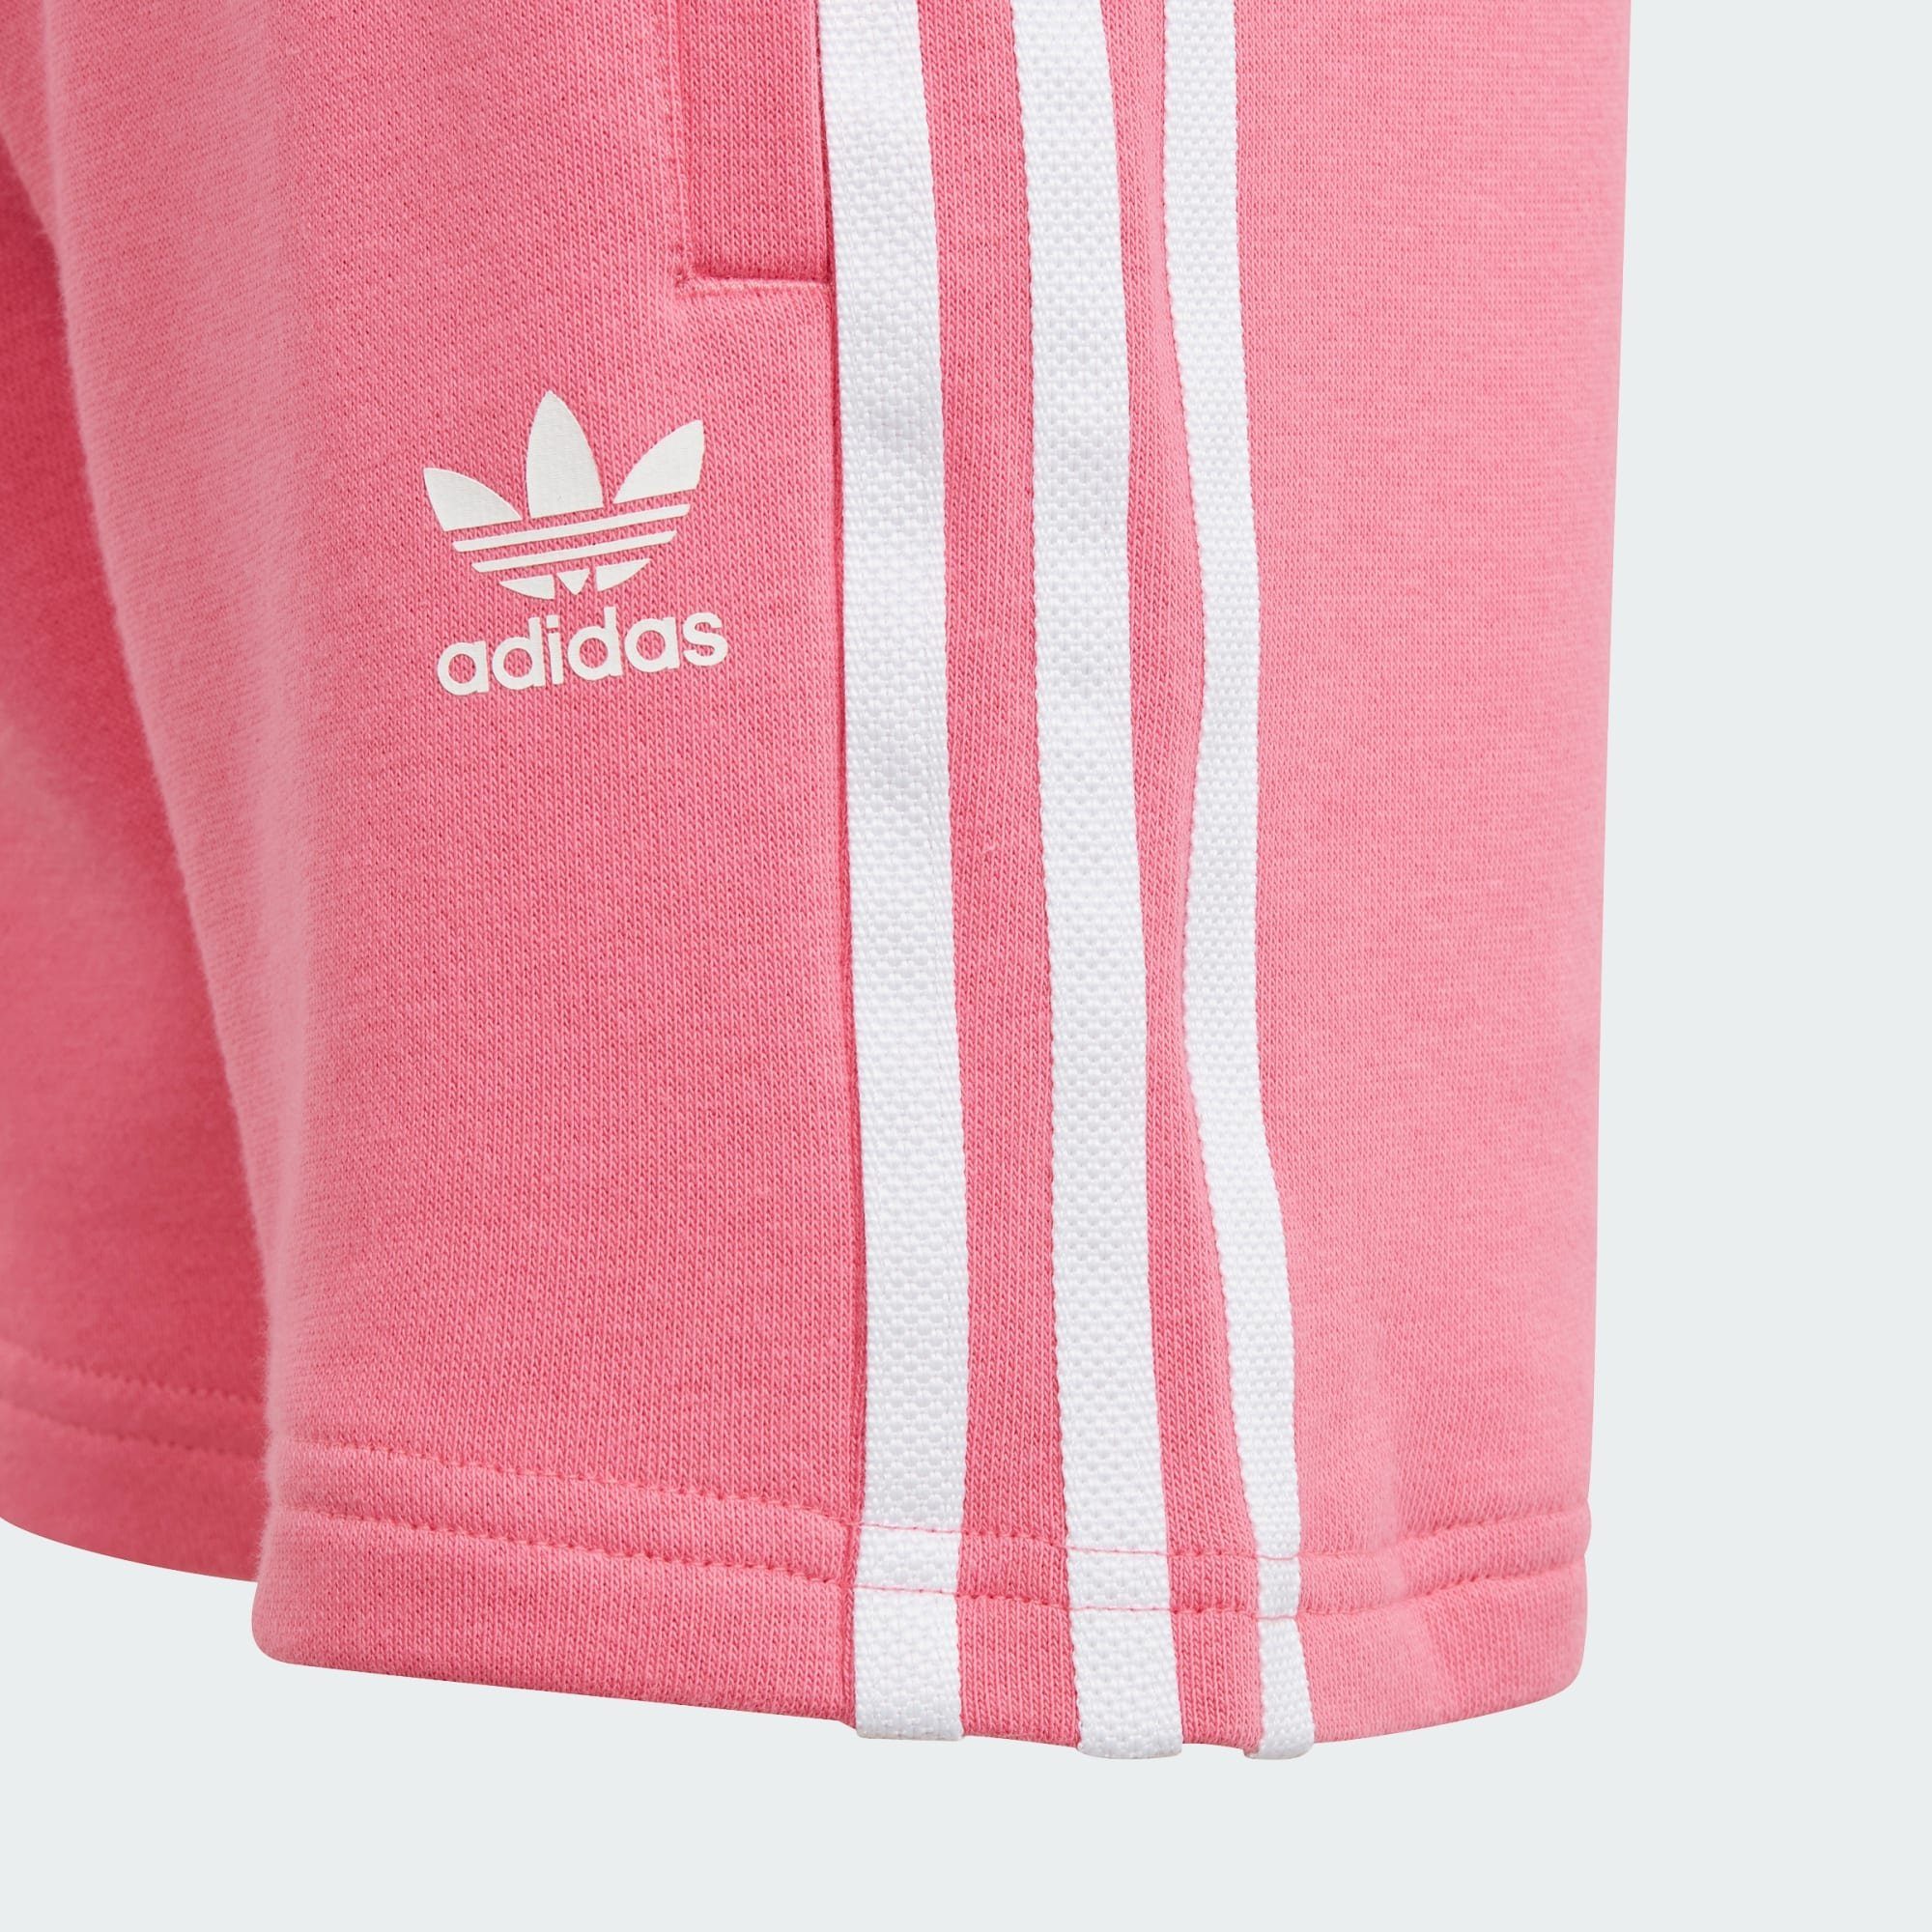 adidas Originals Trainingsanzug ADICOLOR Pink SHORTS UND T-SHIRT Fusion SET